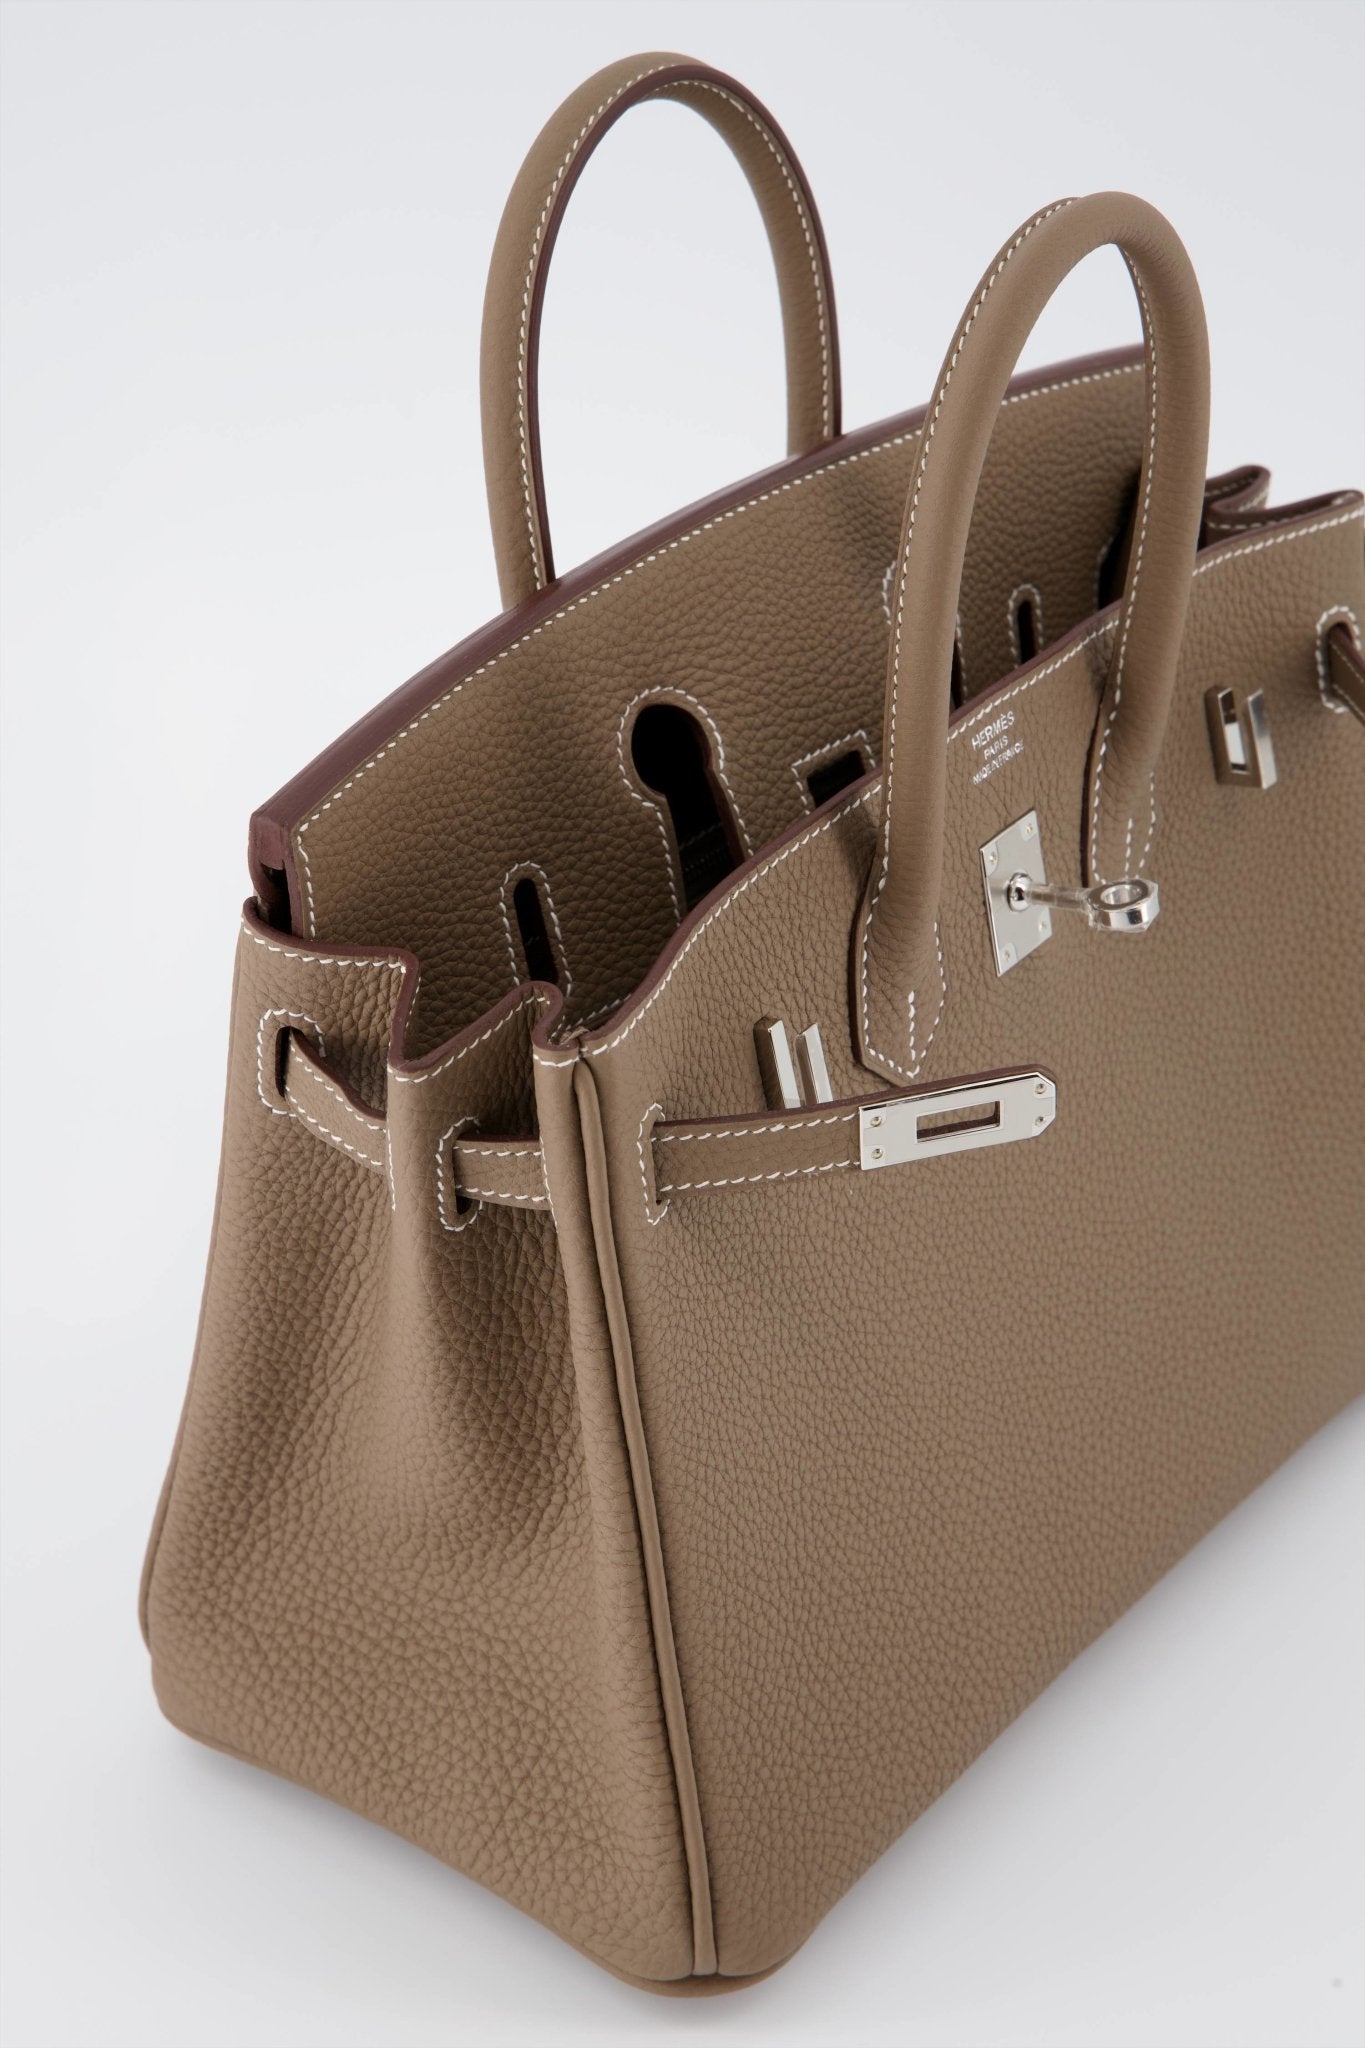 *Holy Grail* Hermes Birkin 25 Handbag Etoupe Togo Leather With Palladium Hardware. Investment Piece